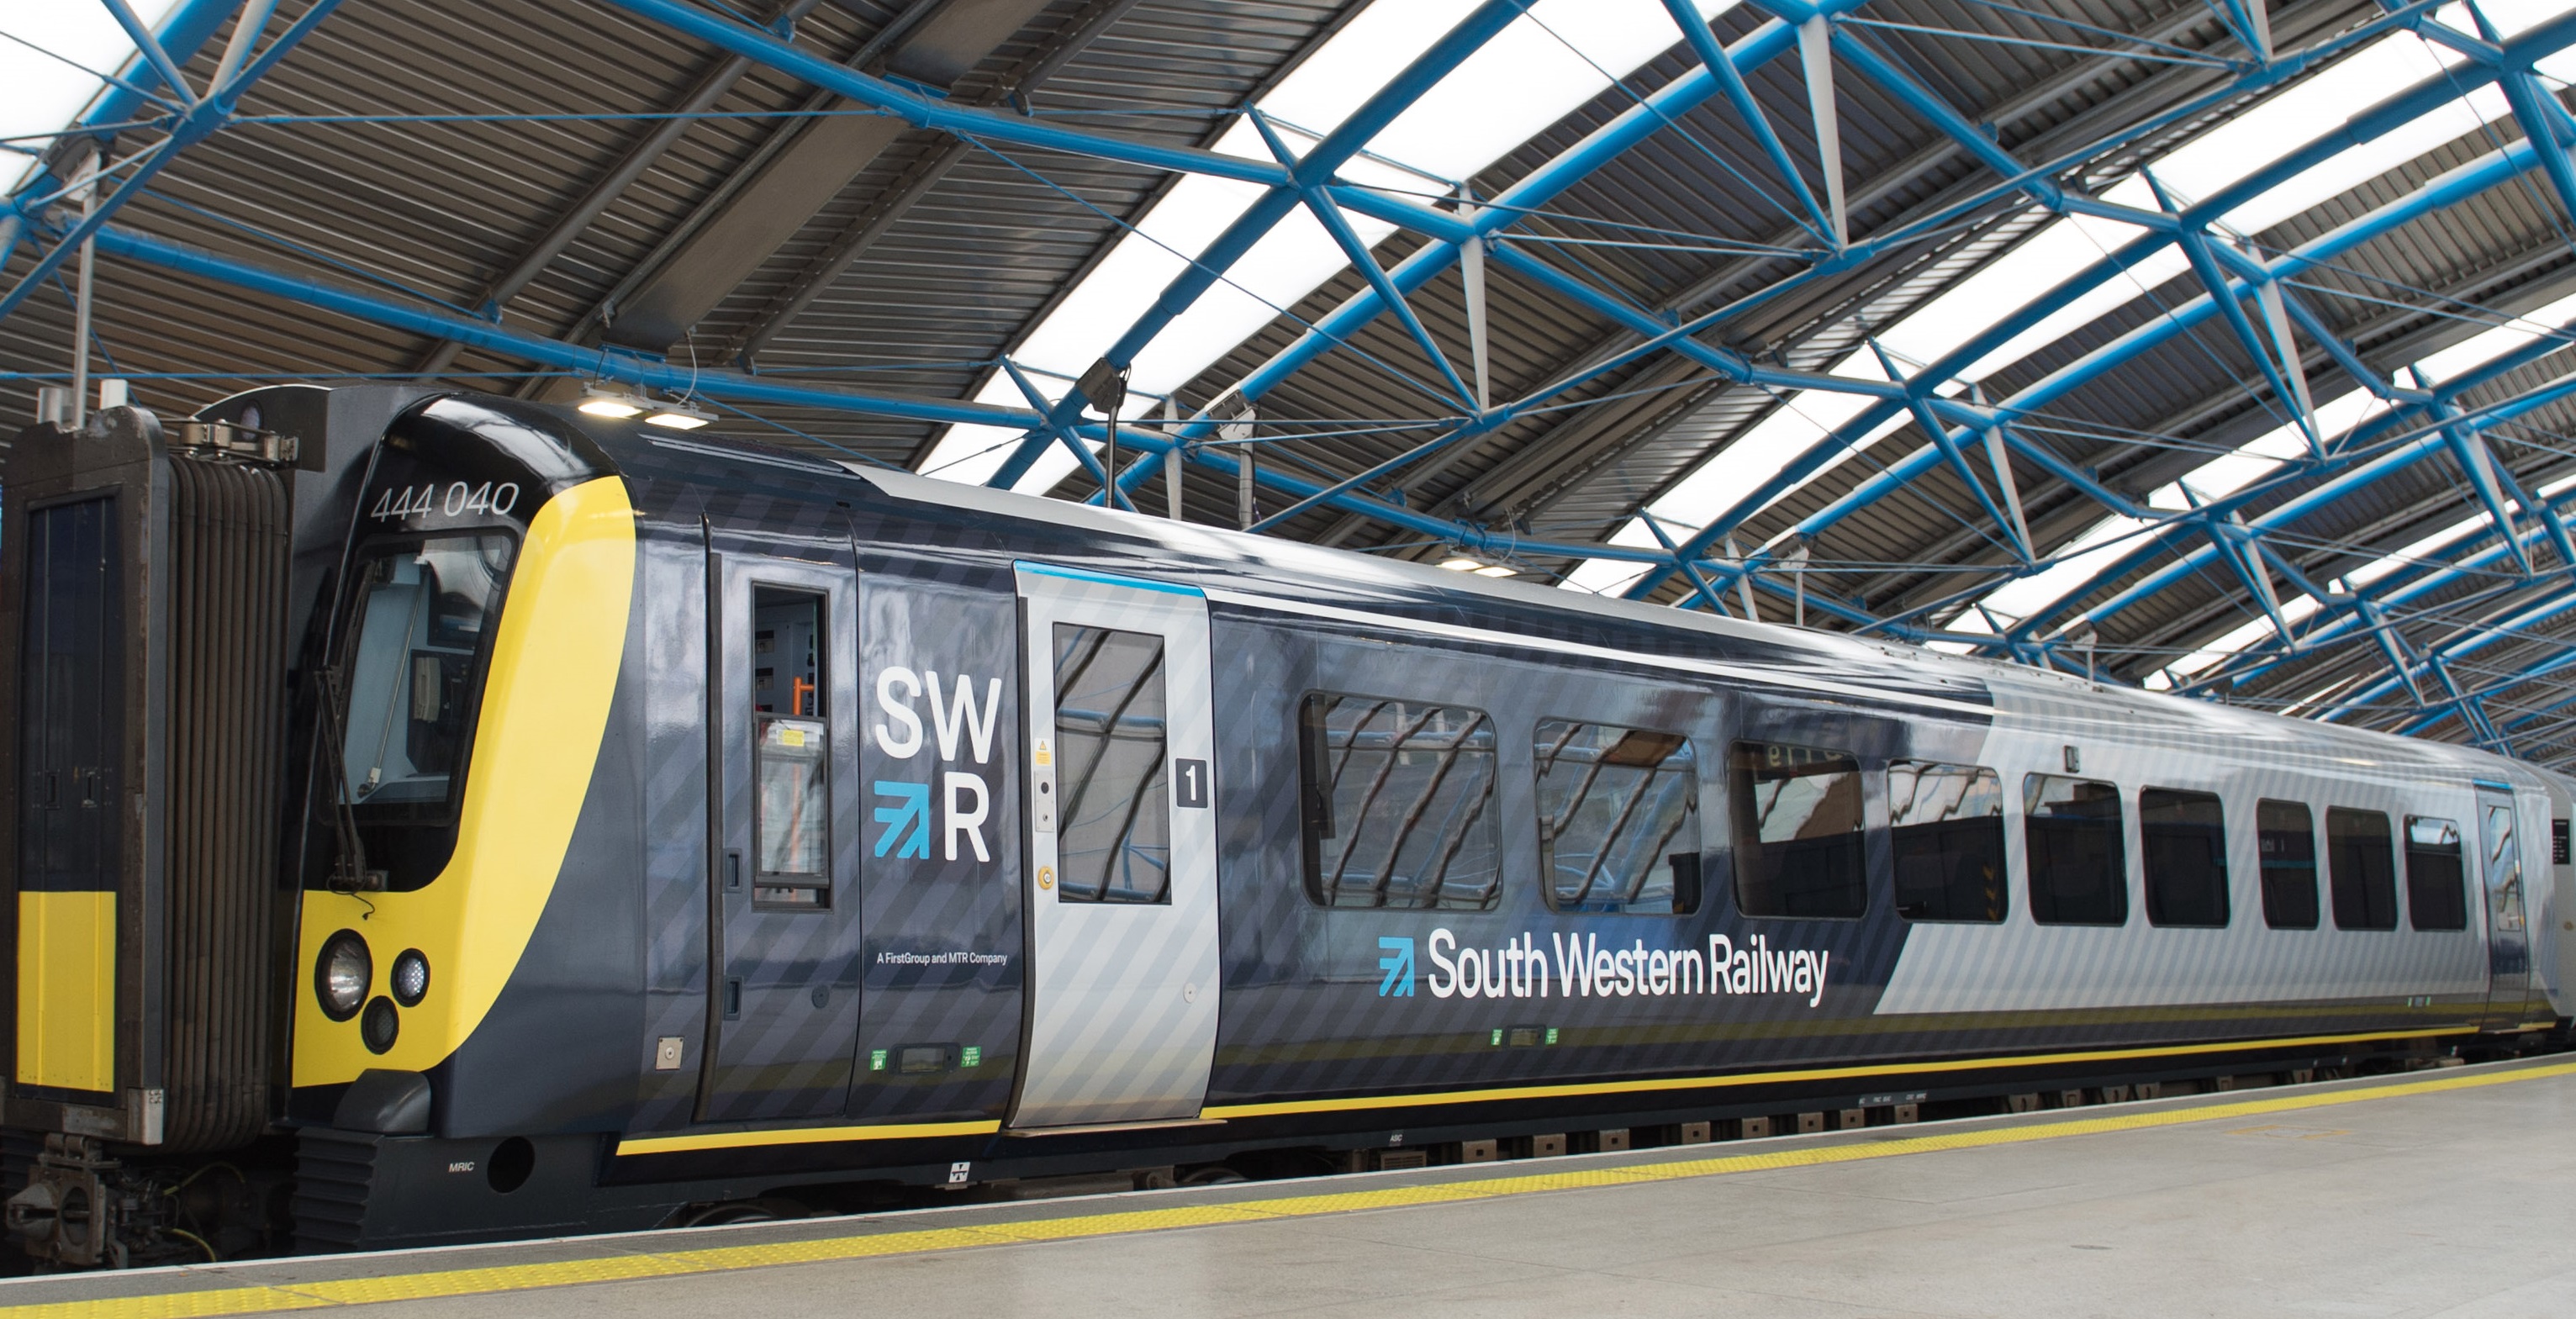 South Western Railway passengers to benefit from £50m train refurbishment upgrade